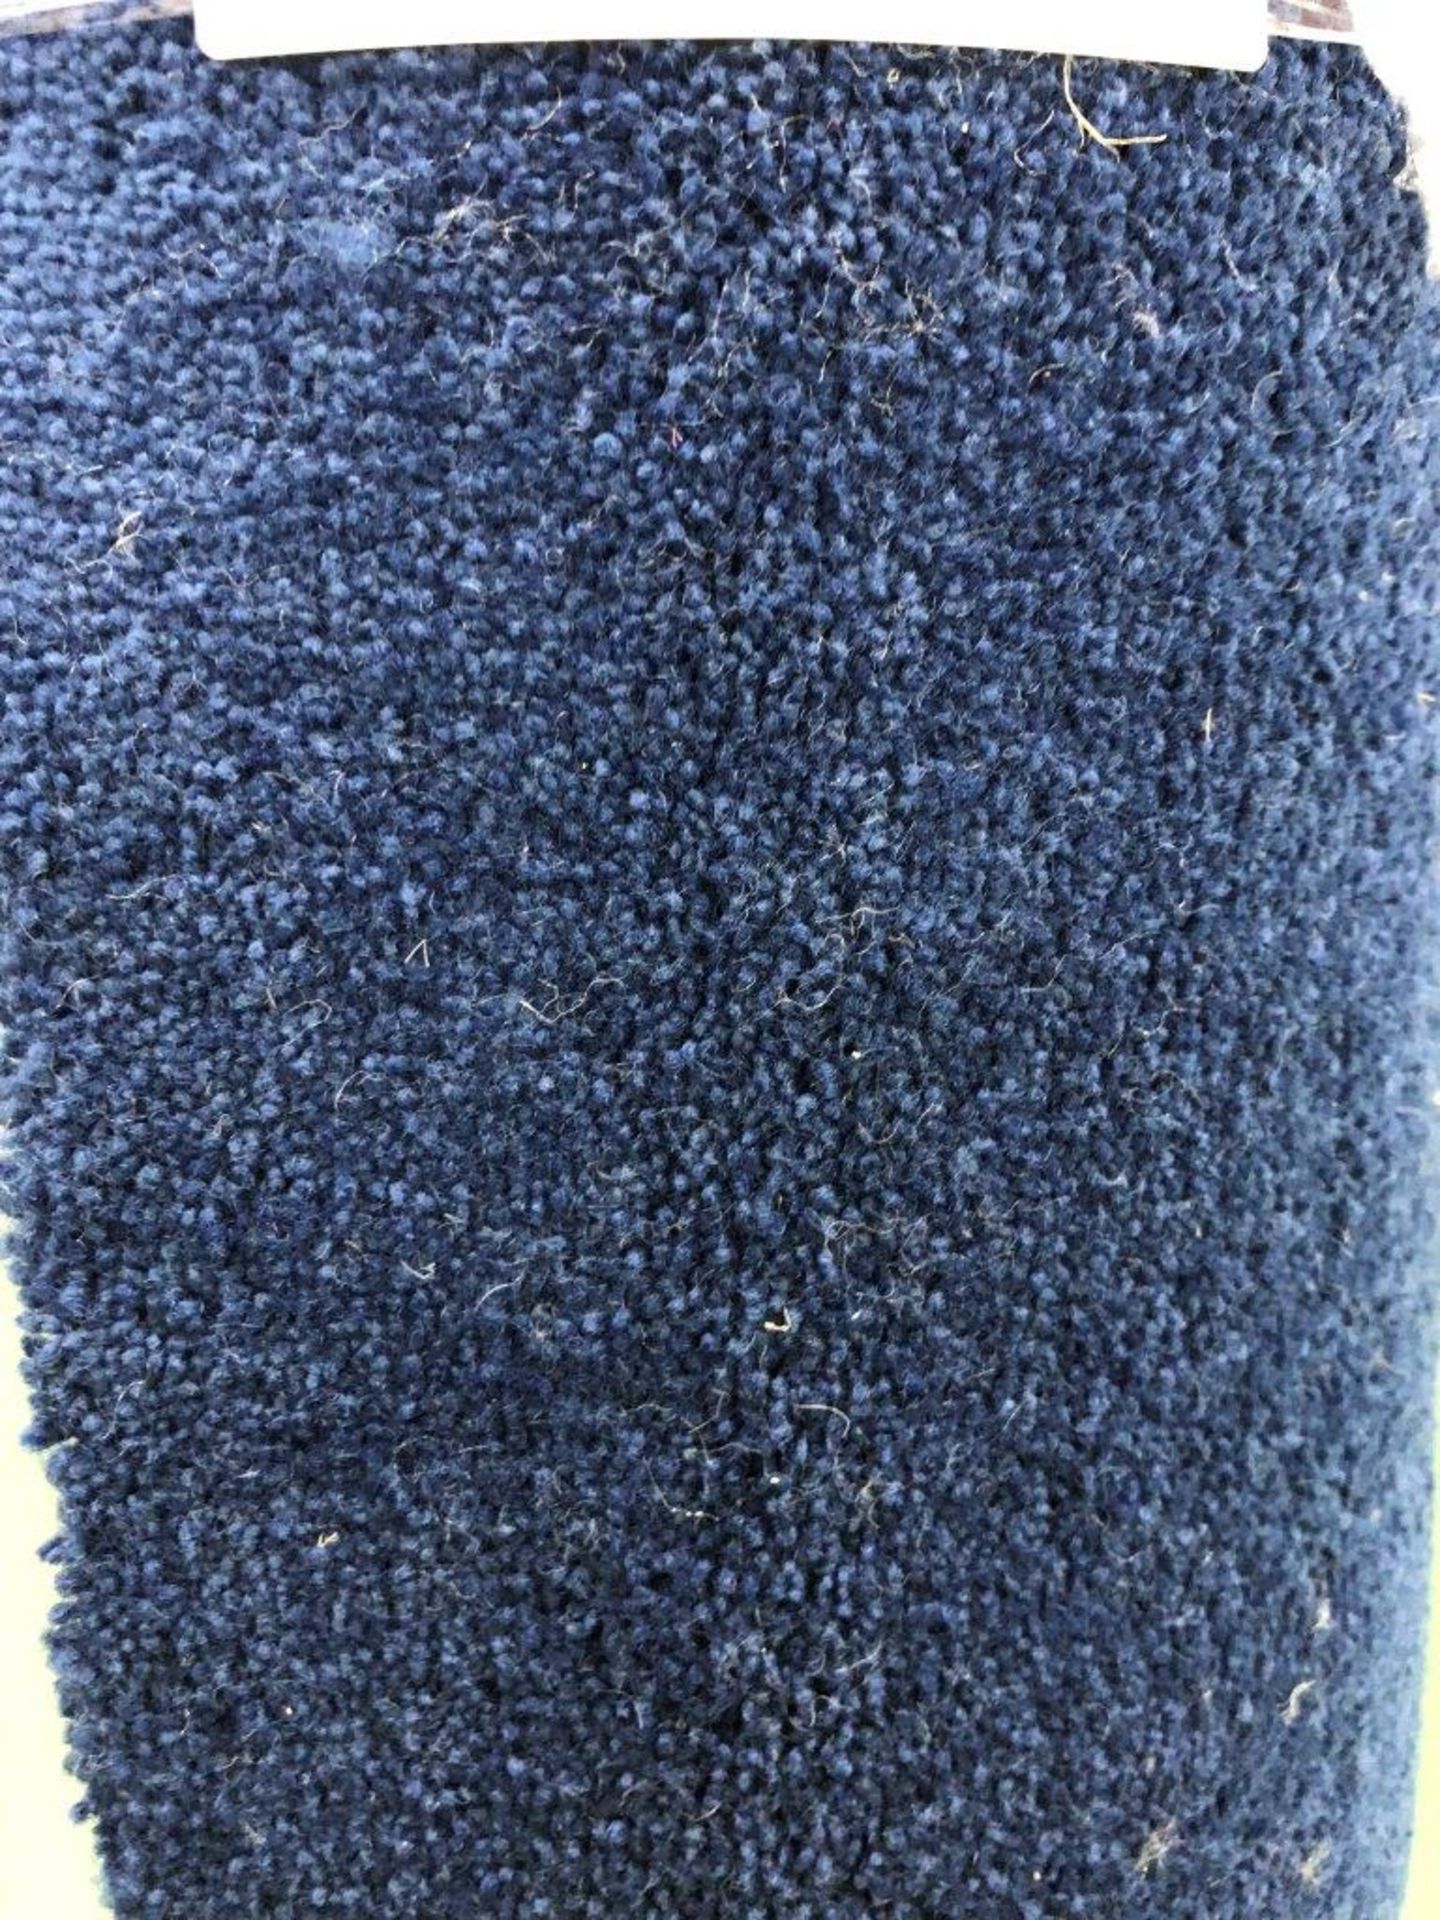 1 x Ryalux Carpet End Roll - Blue 2.0x2.0m2 - Image 3 of 3